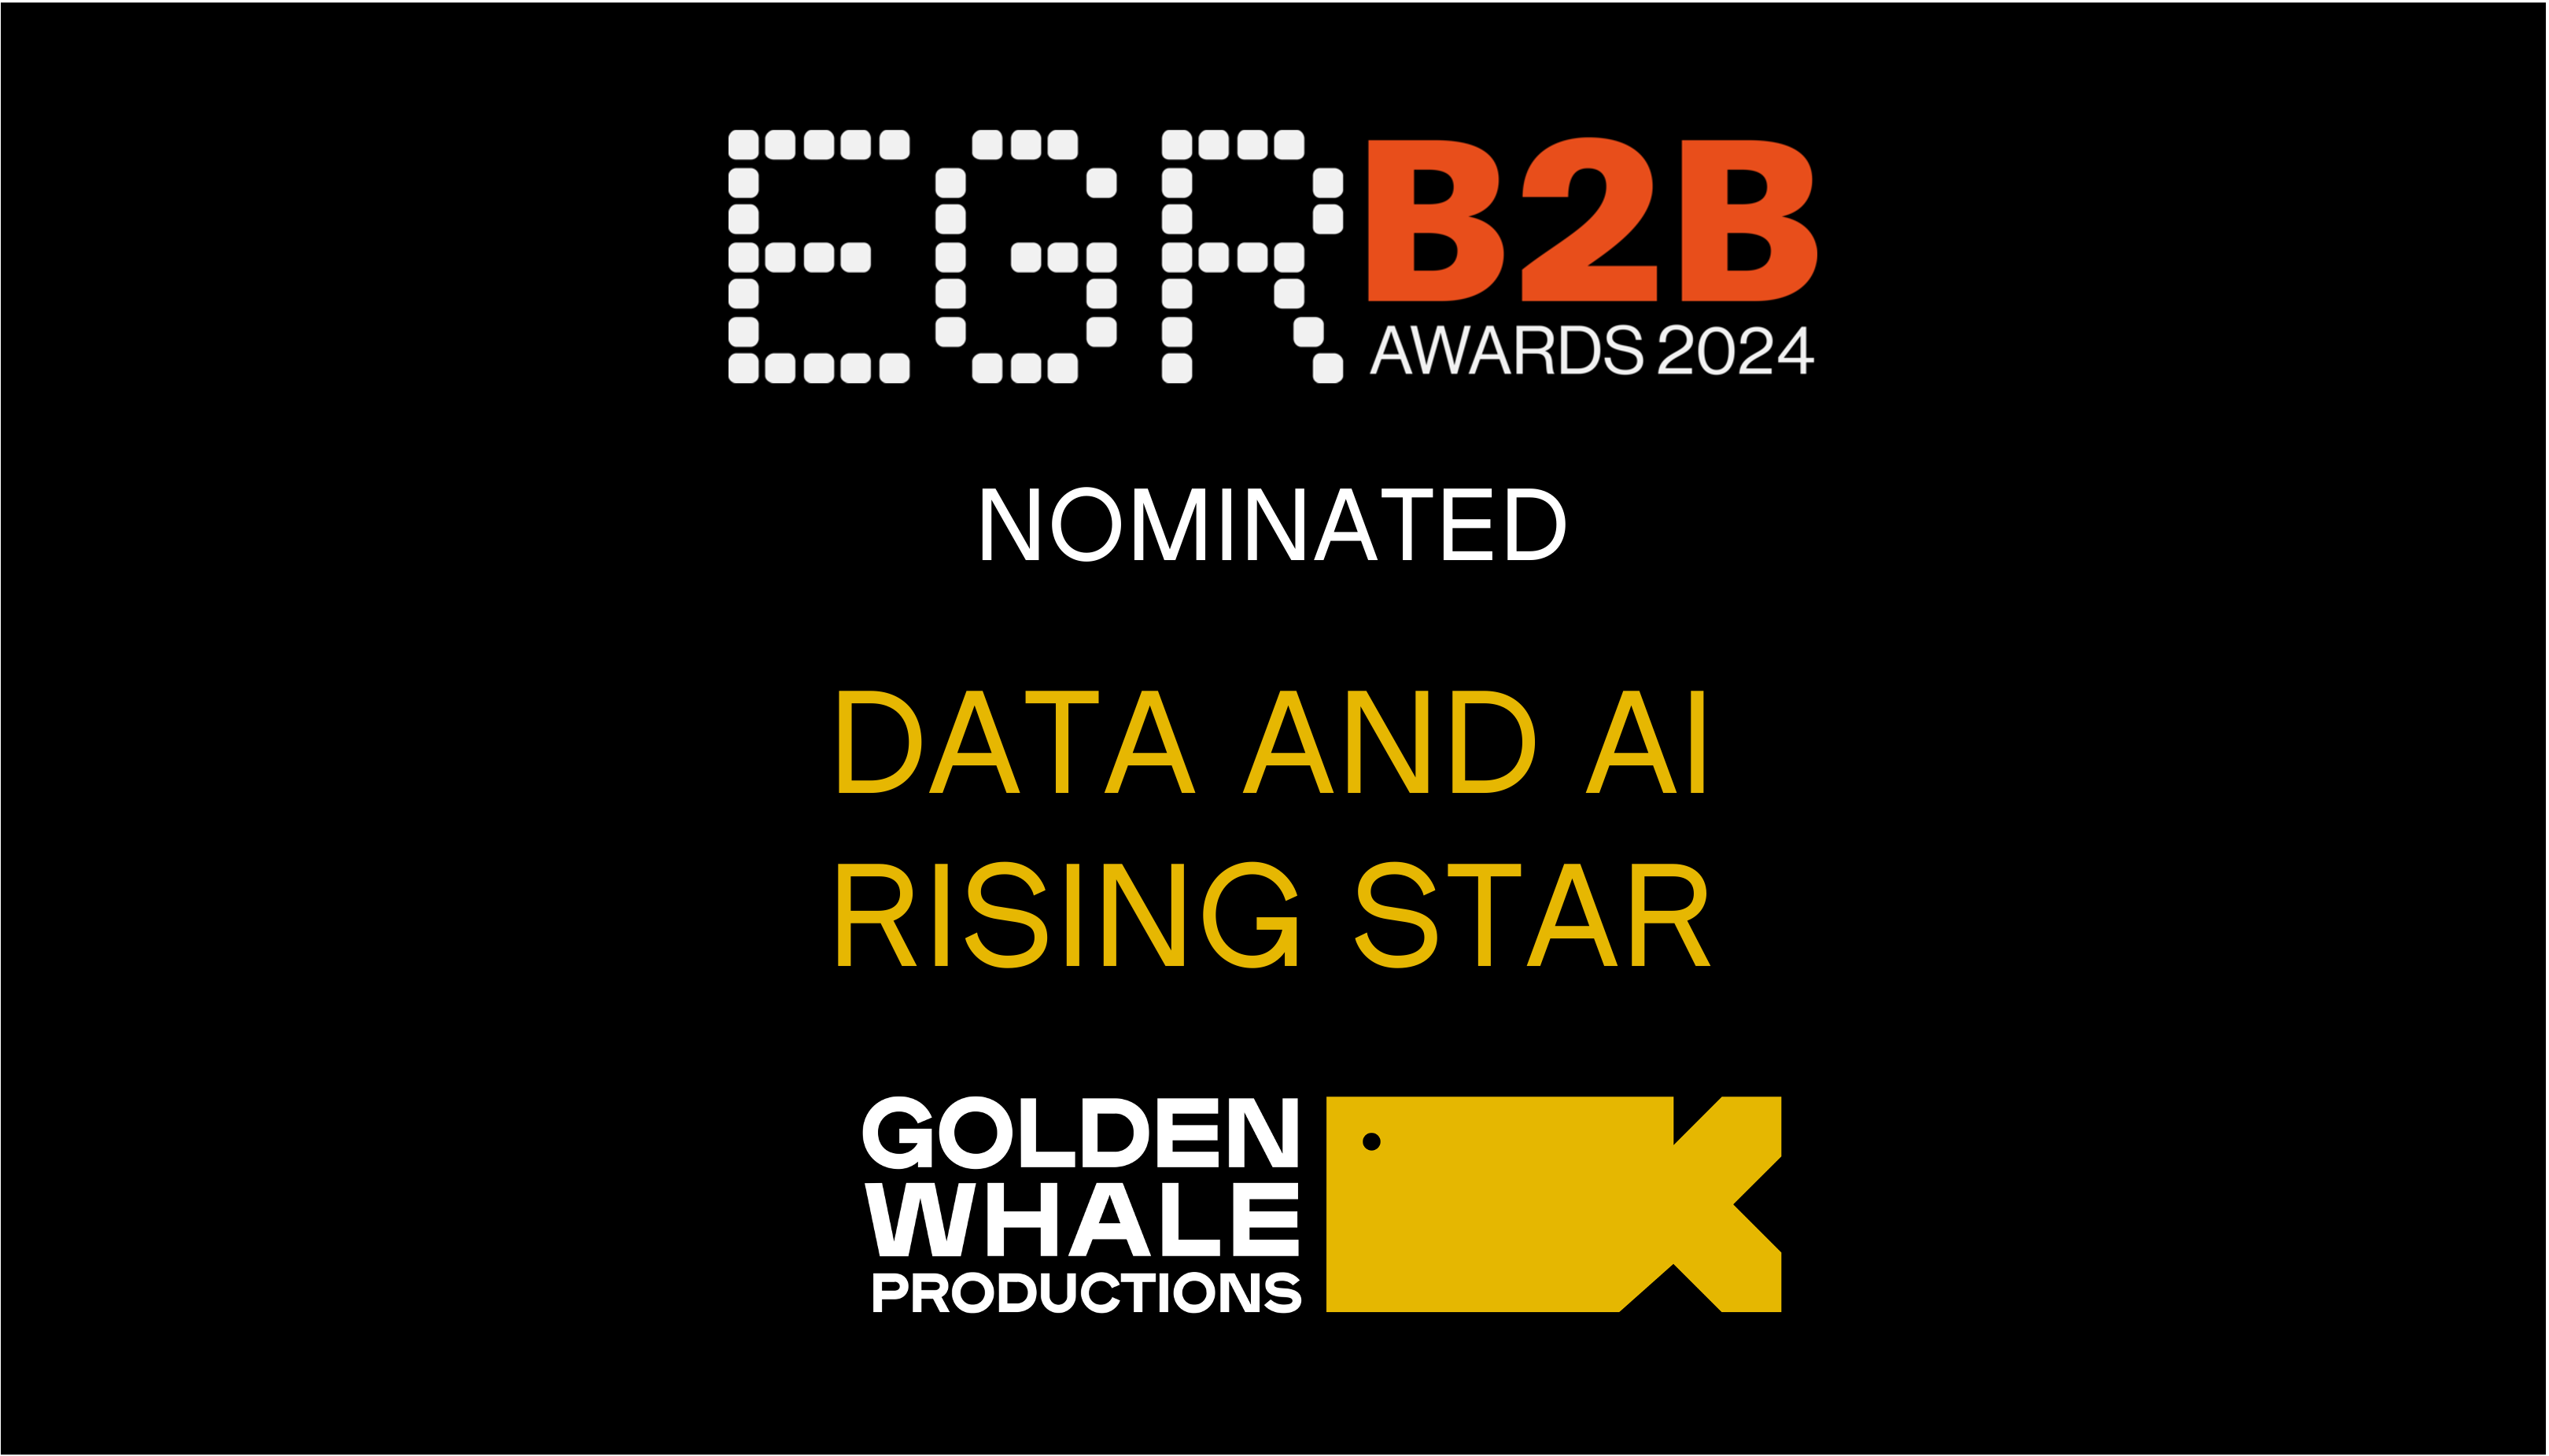 eGR B2B Awards 2024 Nominations Golden Whale